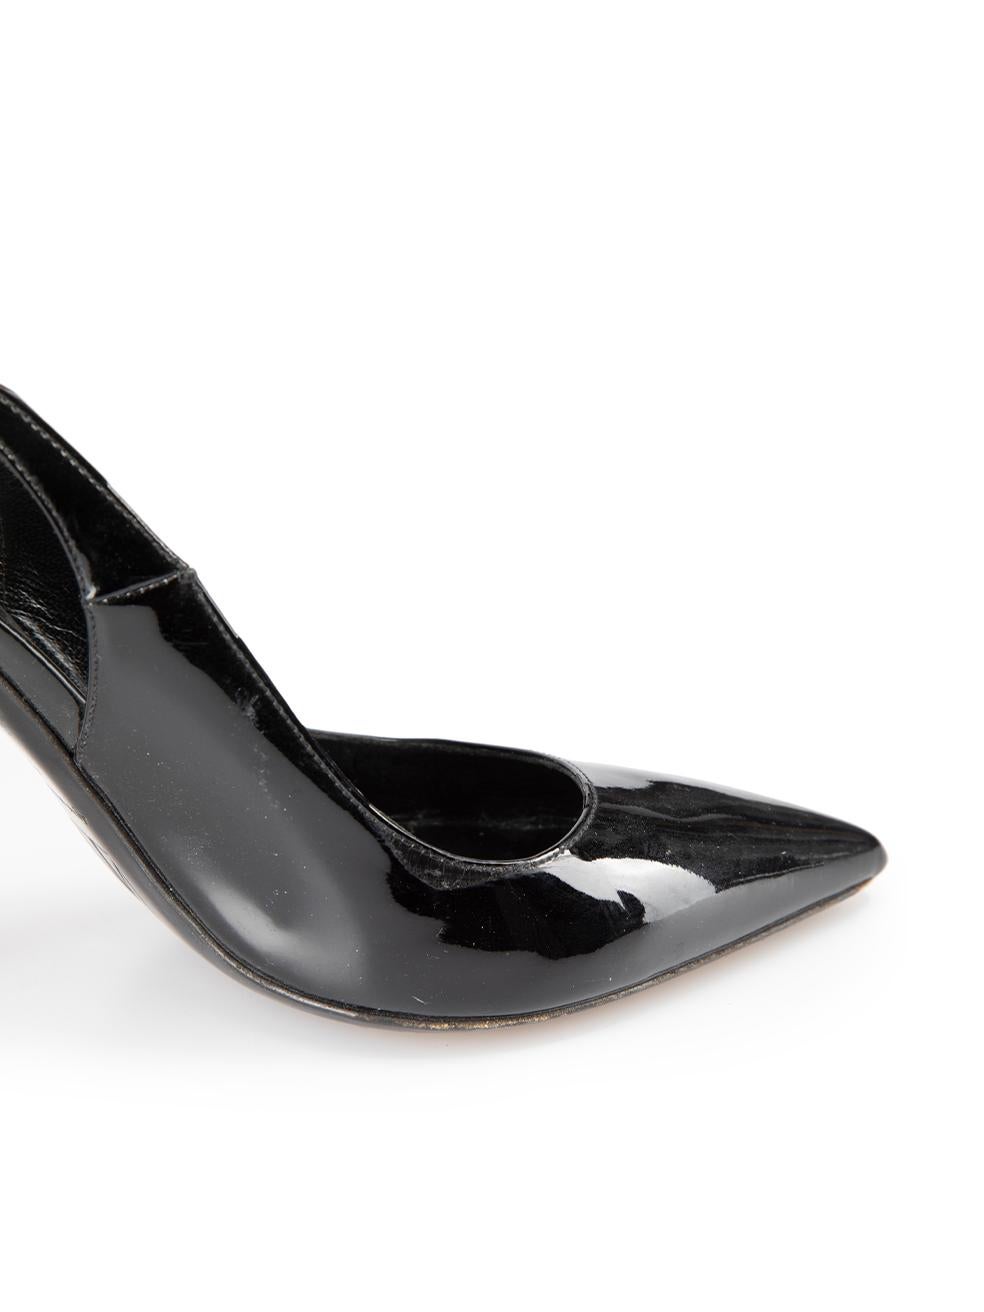 Tamara Mellon Black Patent Leather Pointed Toe Slingback Heels Size IT 37 2